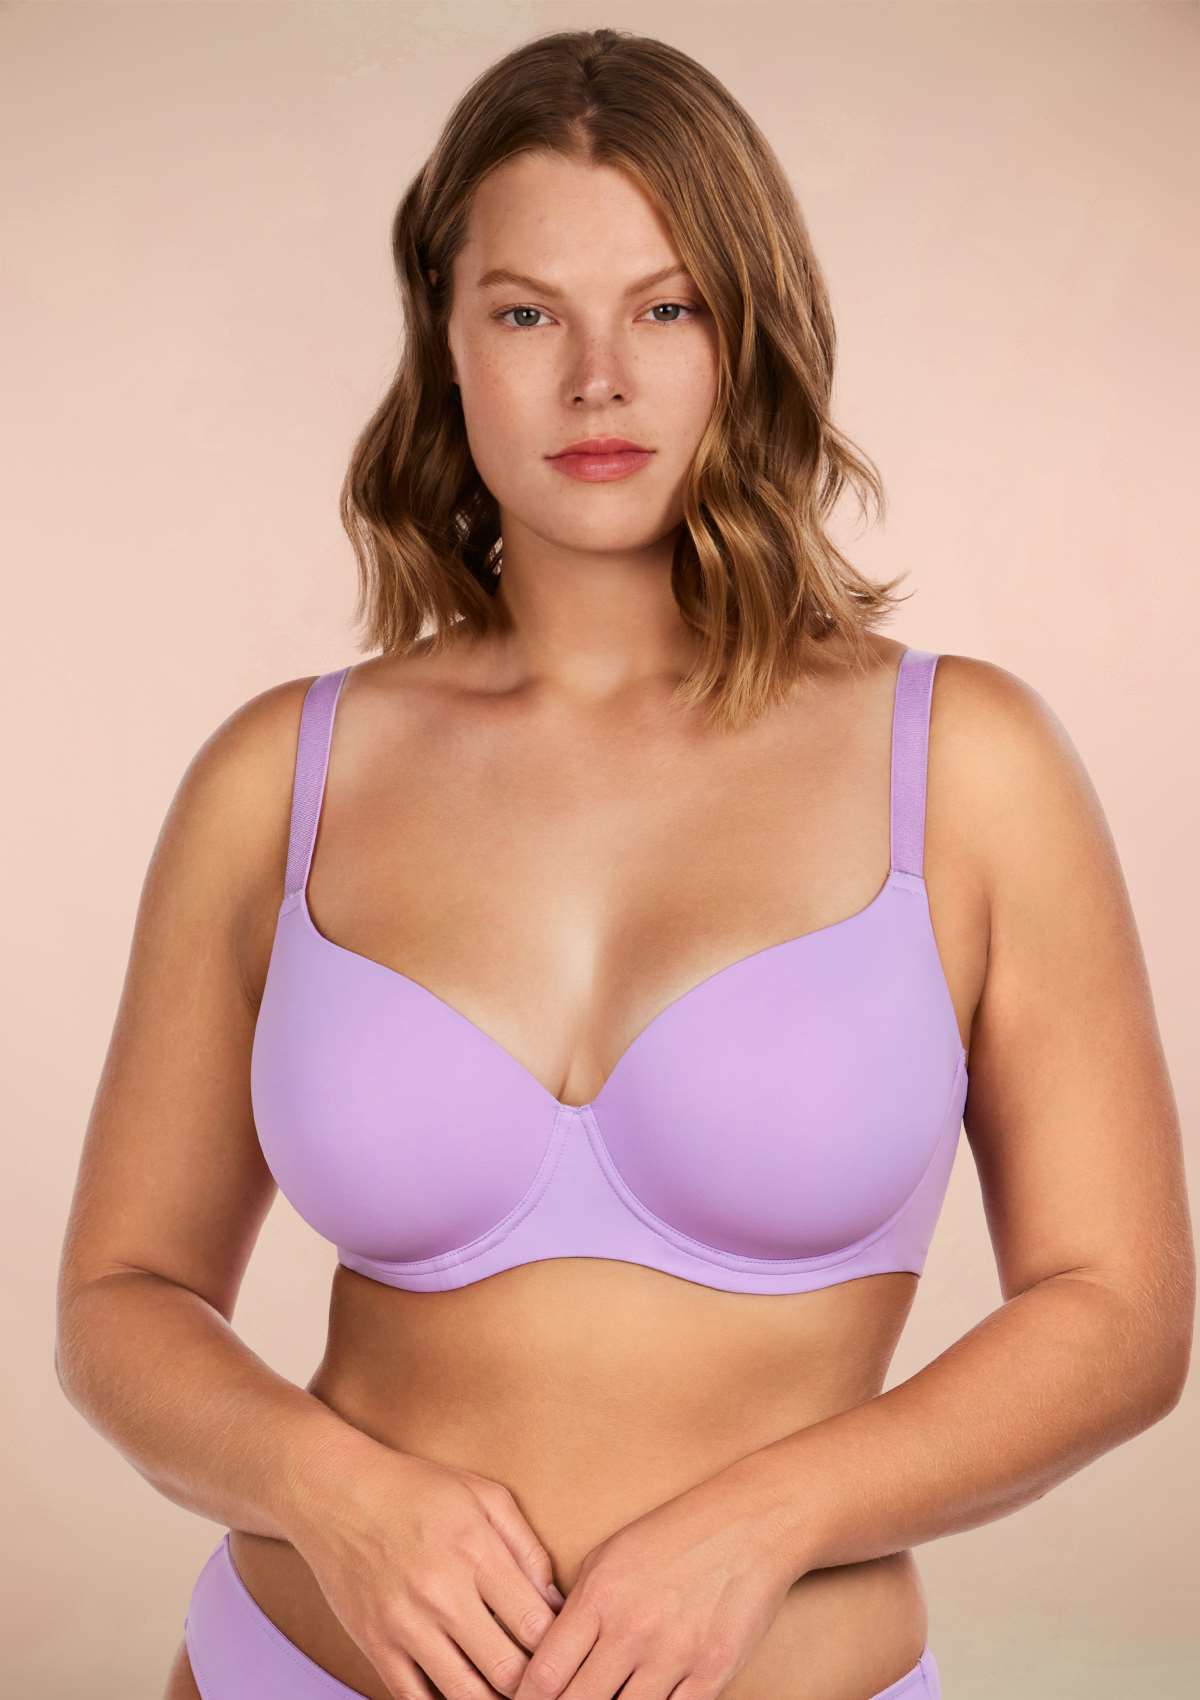 HSIA Gemma Smooth Lightly Padded T-shirt Bra For Heavy Breasts - Pink / 42 / DDD/F